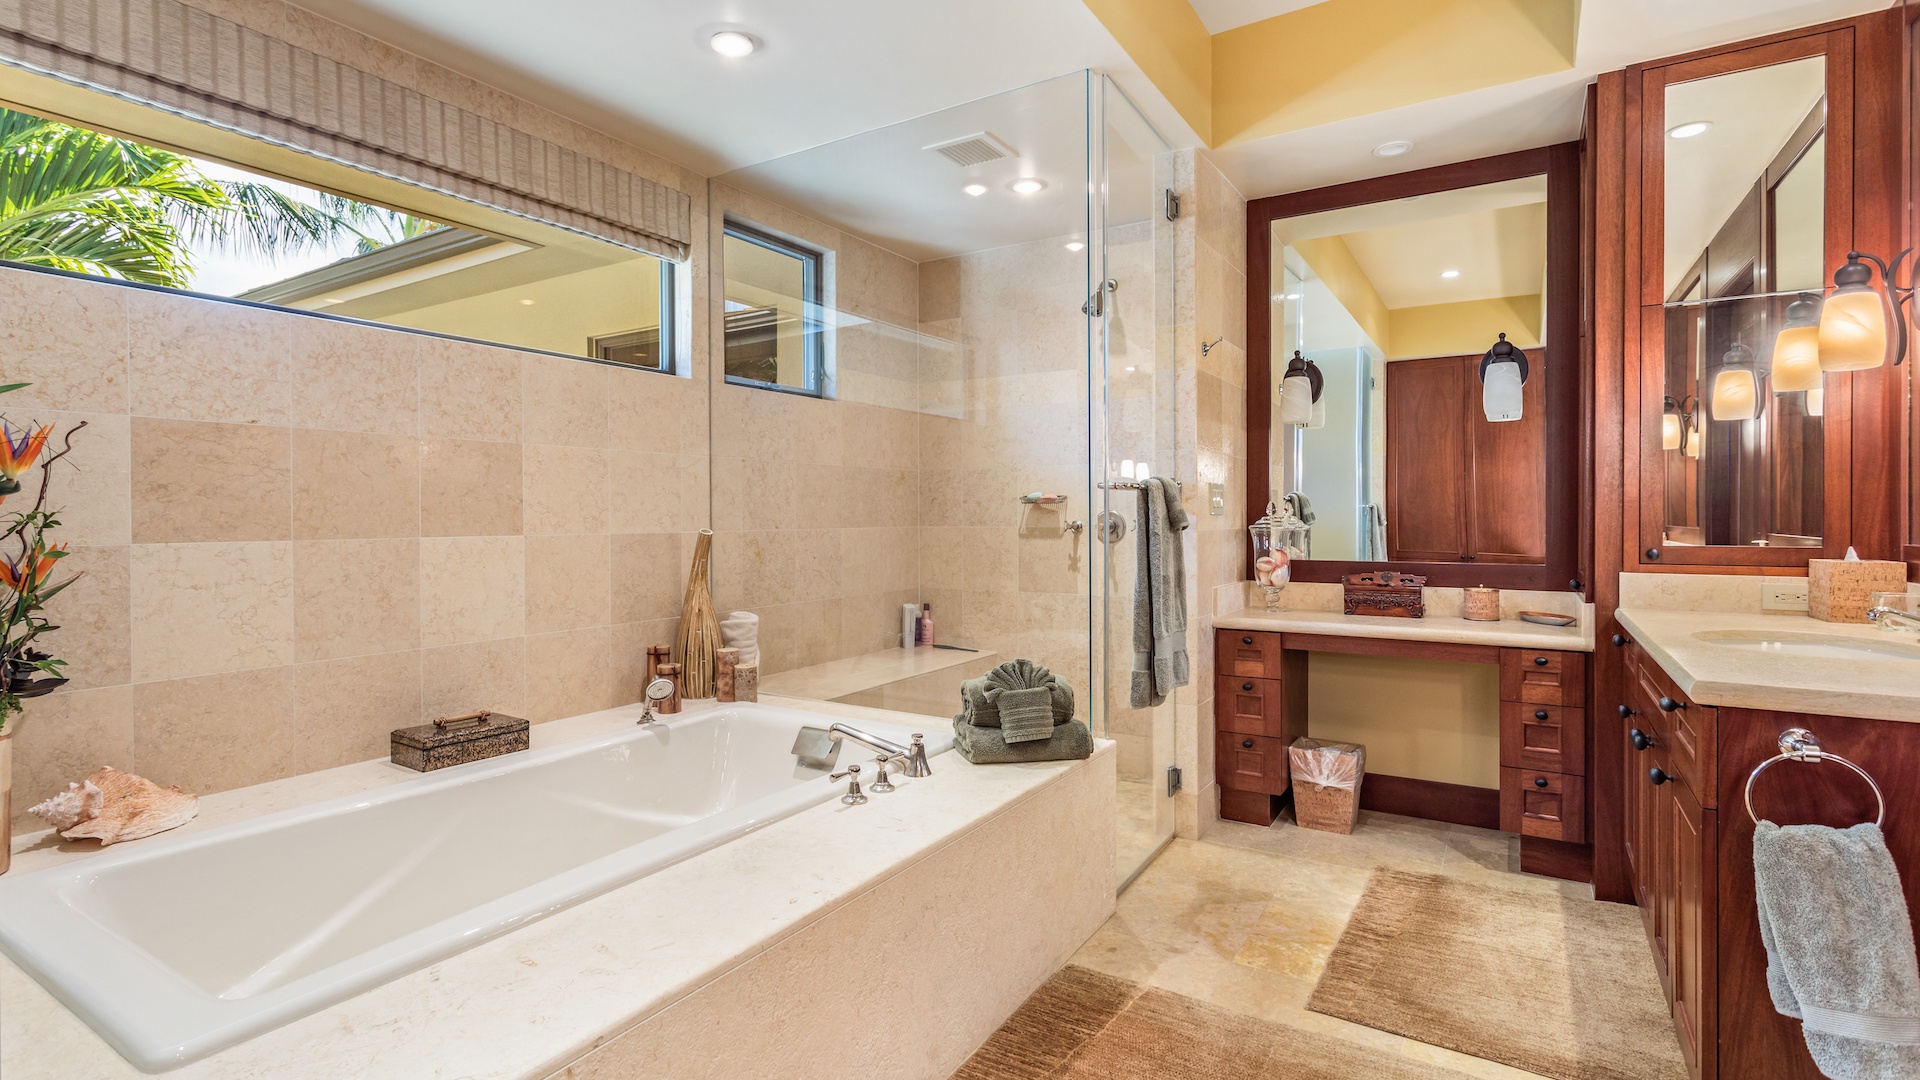 Kailua Kona Vacation Rentals, 2BD Hainoa Villa (2907B) at Four Seasons Resort at Hualalai - Primary Bath with Soaking Tub, Walk-In Shower, Privacy Commode & Dual Vanity.